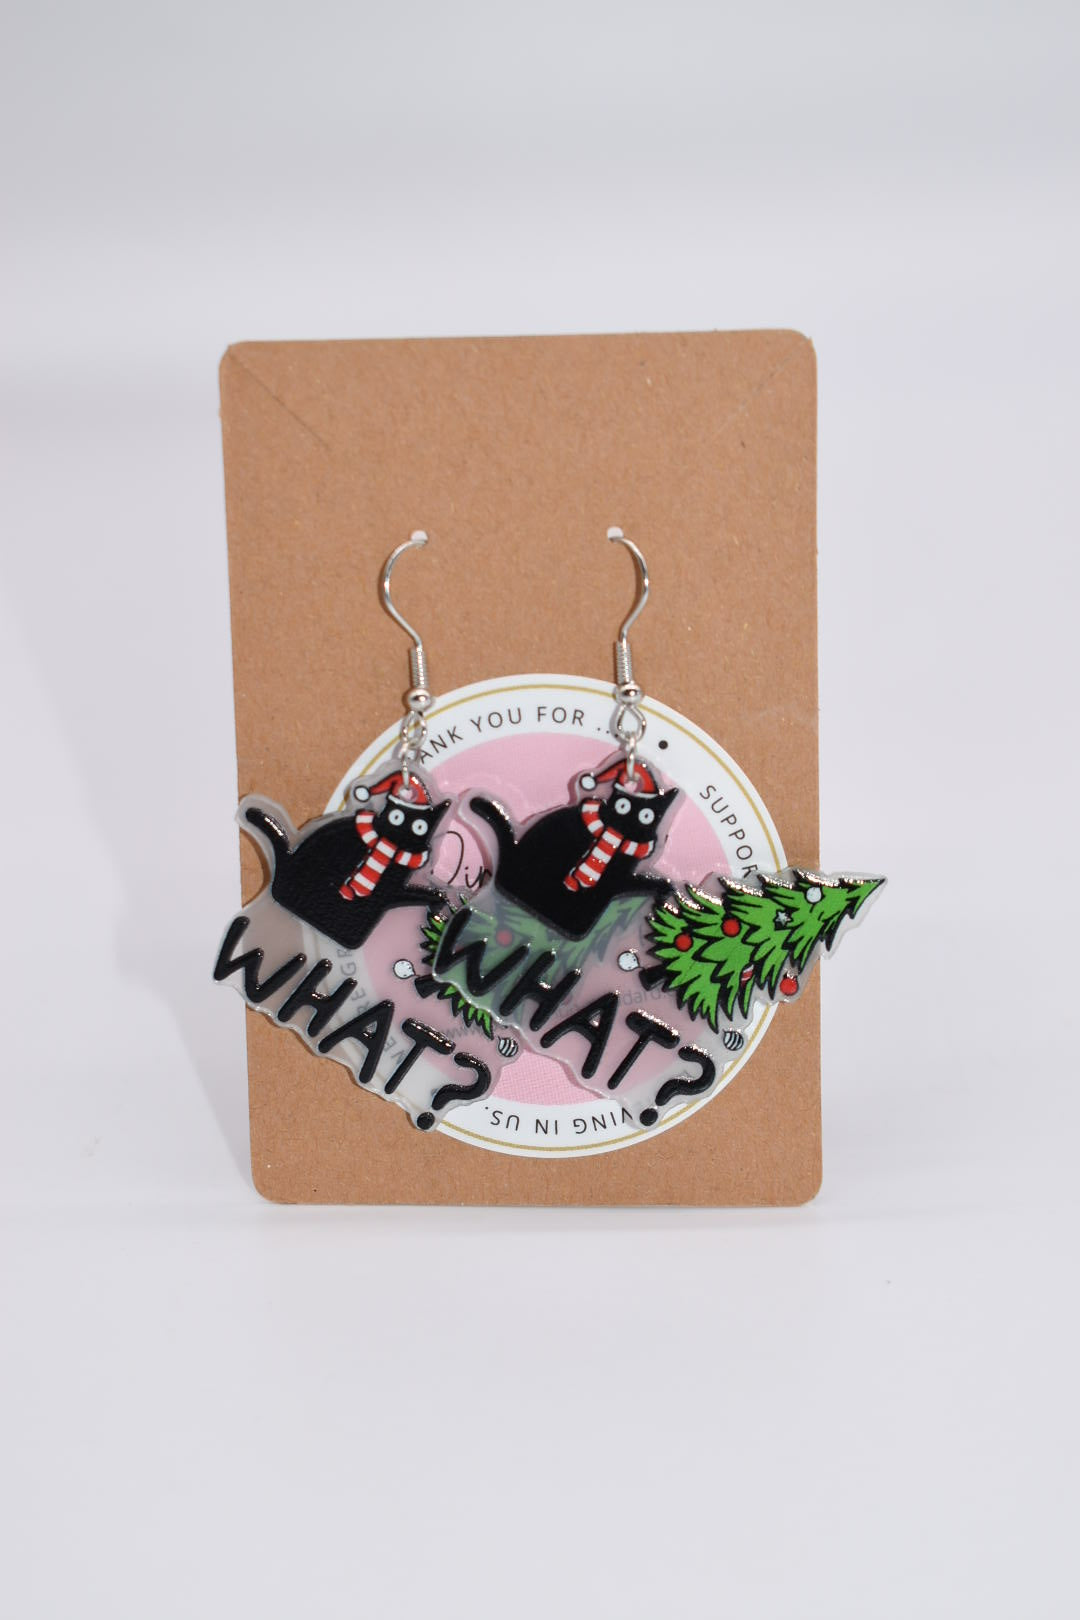 Seasonal Earrings: "Frisky Whisker Christmas" Drop Earrings